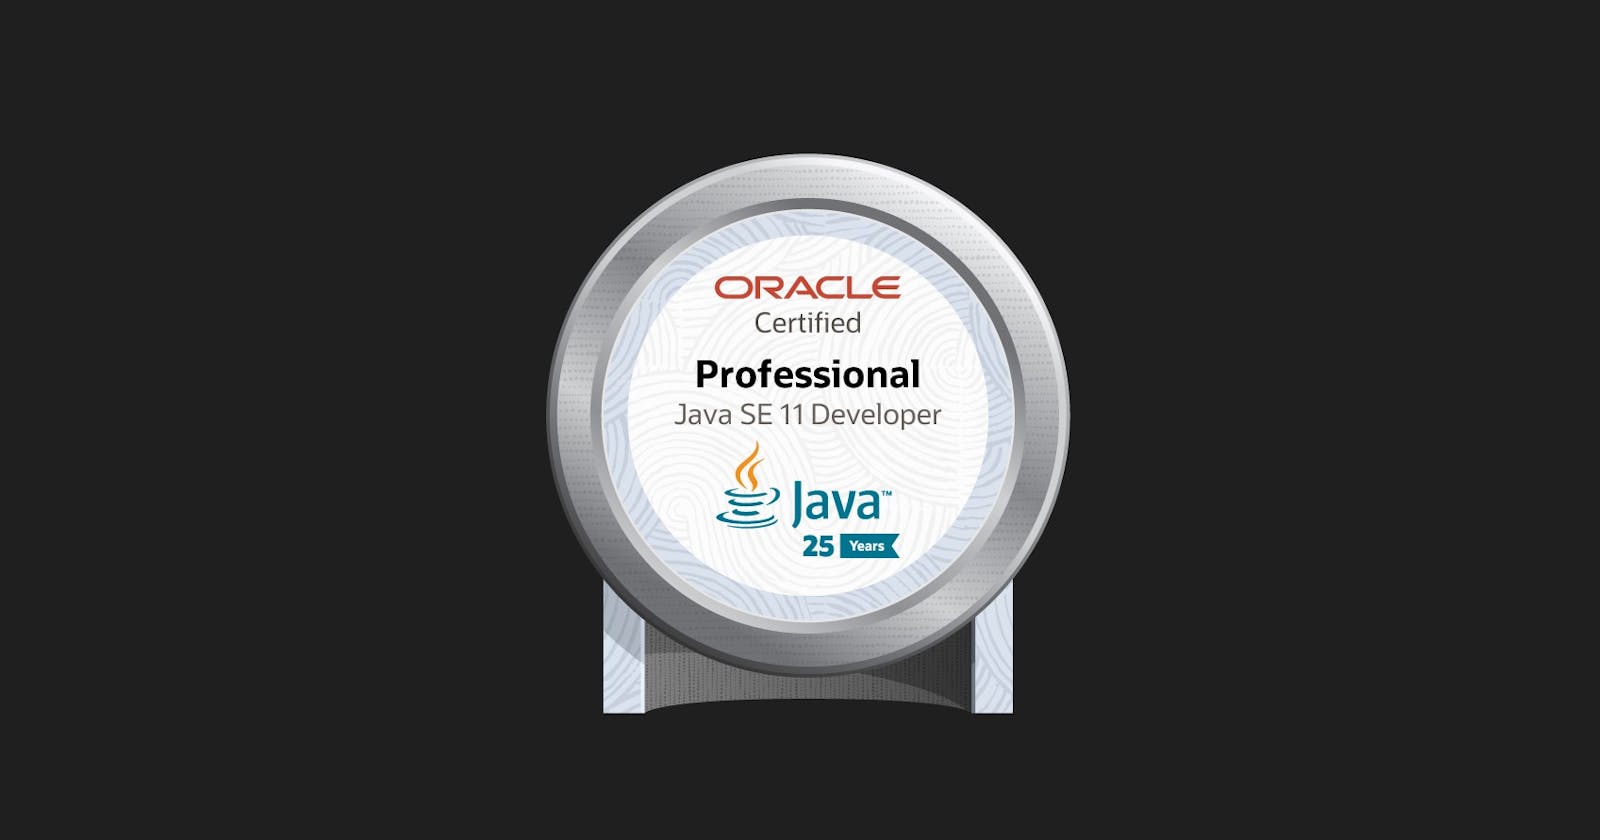 My experience in taking OCP Java SE 11 Developer